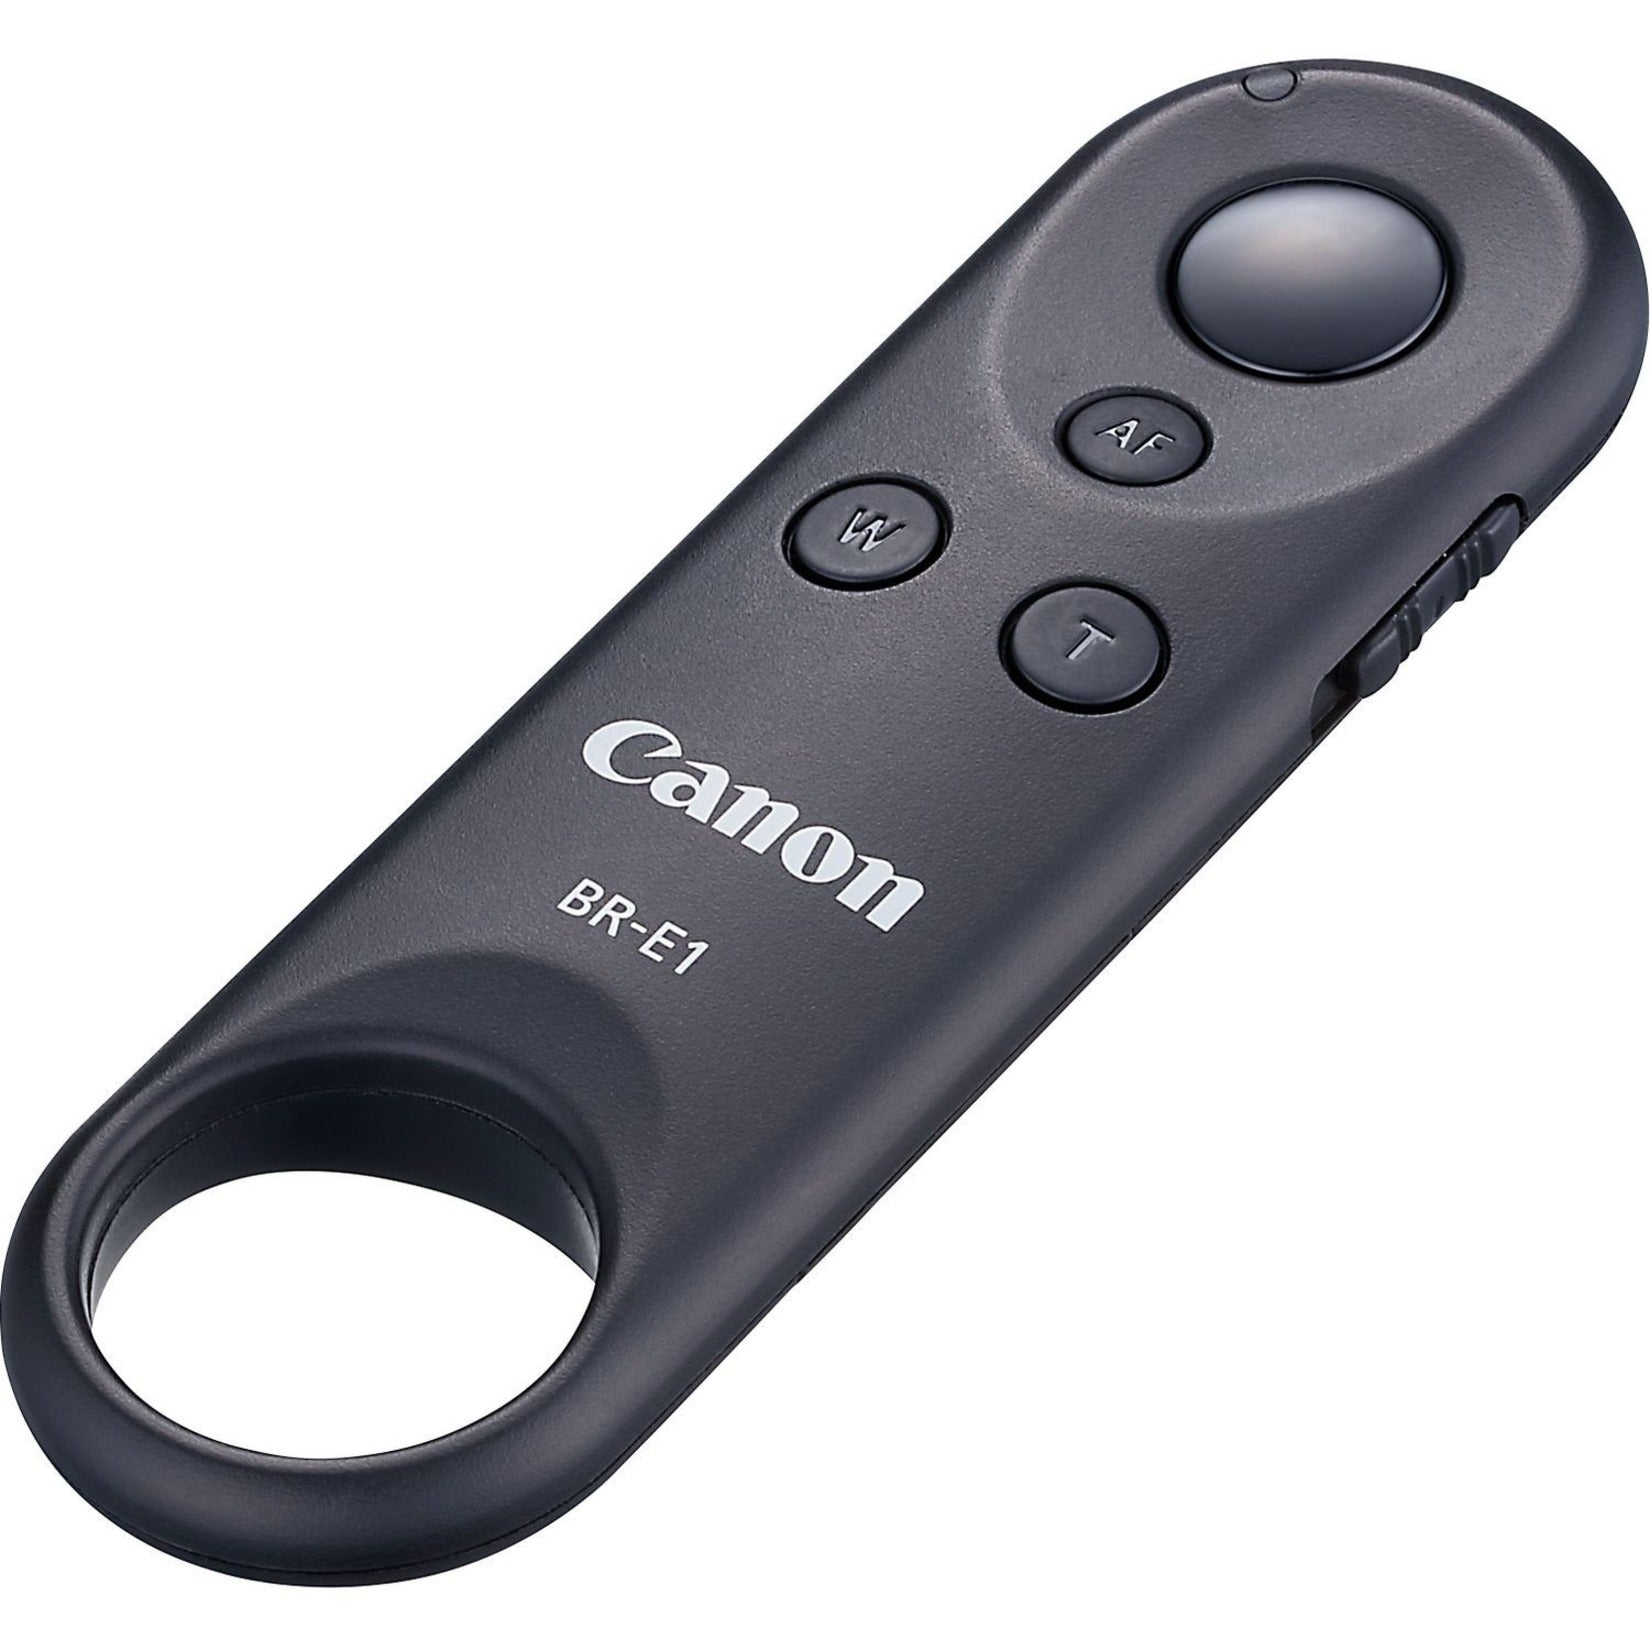 Canon 2140C001 Wireless Remote Control BR-E1, Compatible with Canon Cameras, Bluetooth Technology